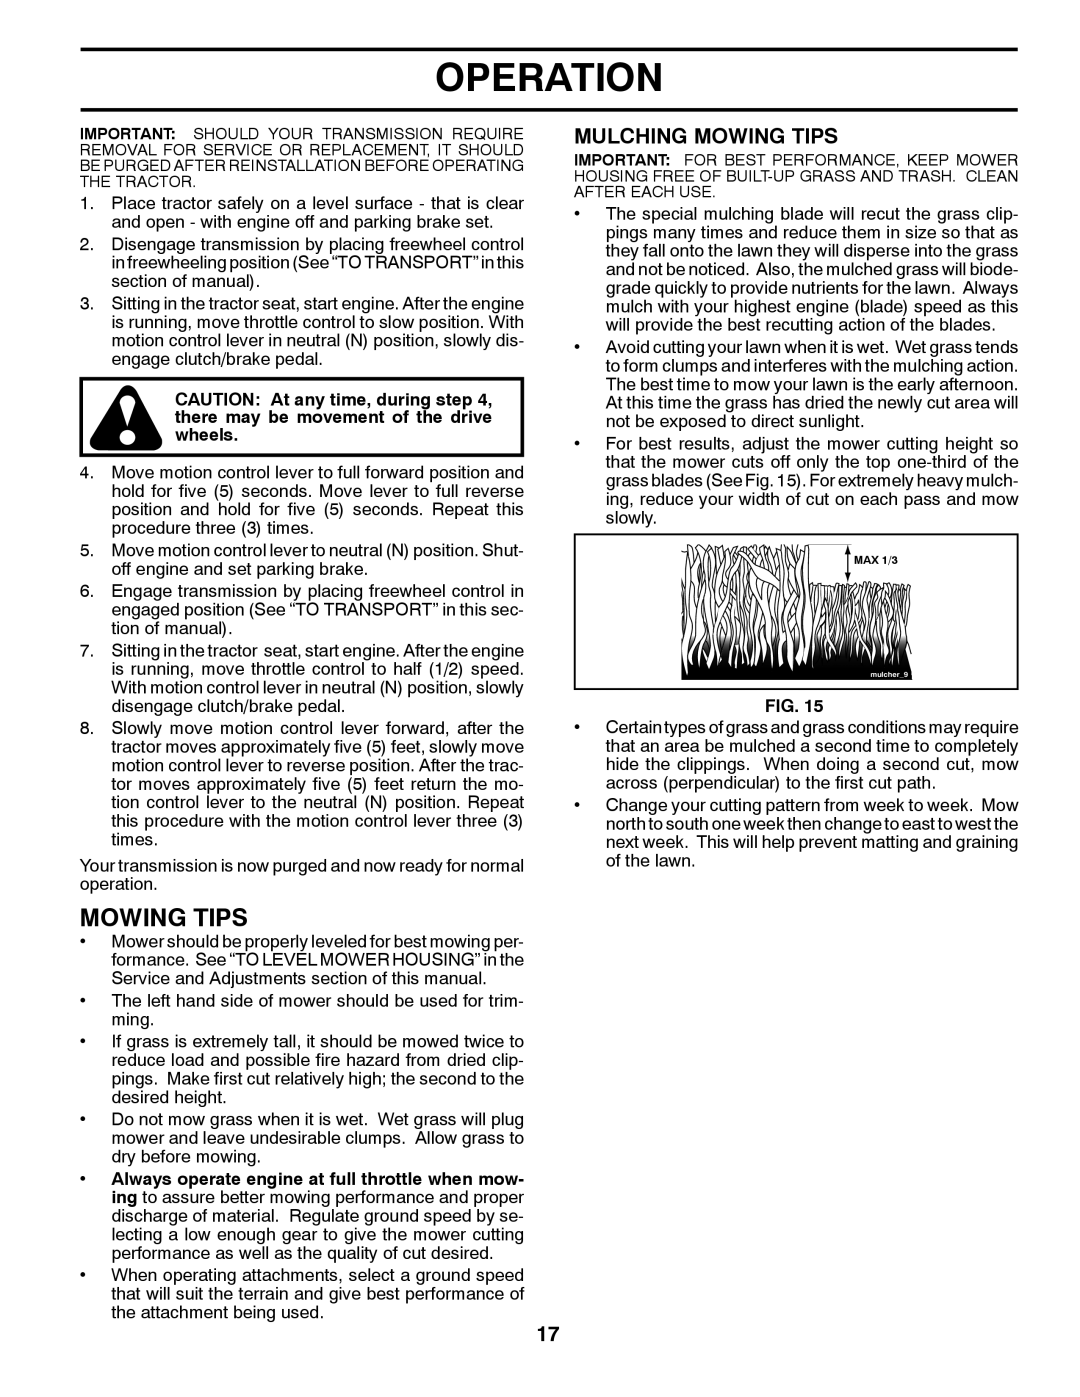 Husqvarna CTH2036 XP owner manual Mulching Mowing Tips, Operation 